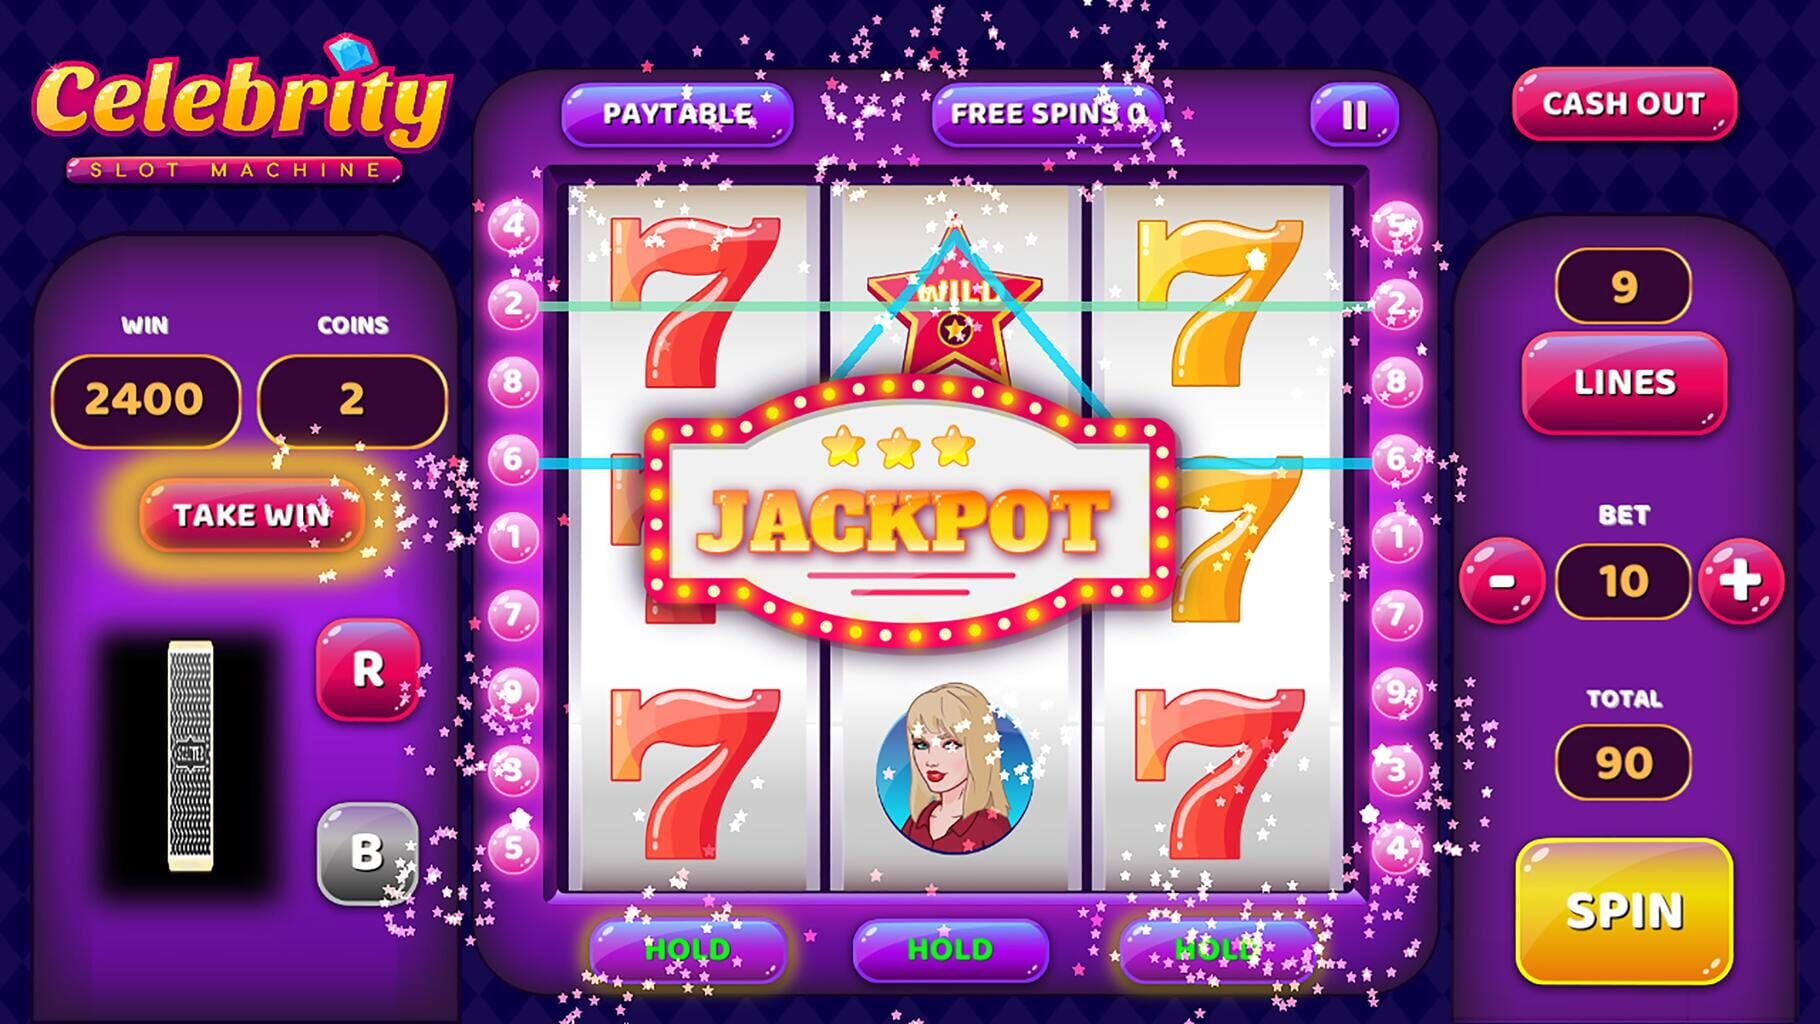 Captura de pantalla - Celebrity Slot Machine